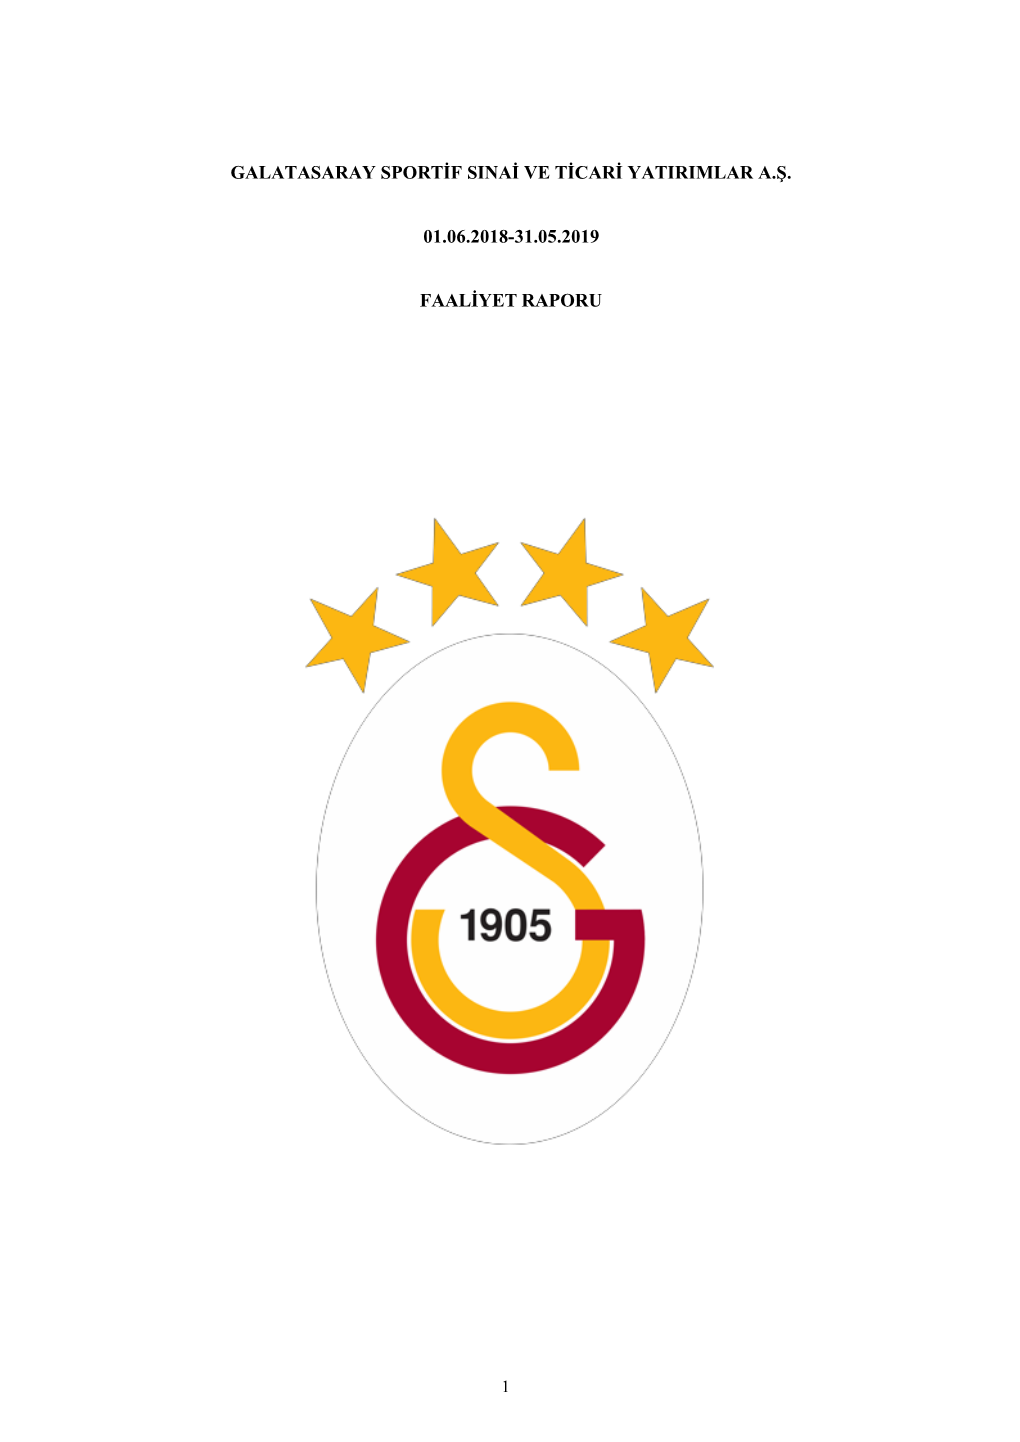 Galatasaray Sportif Sinai Ve Ticari Yatirimlar A.Ş. 01.06